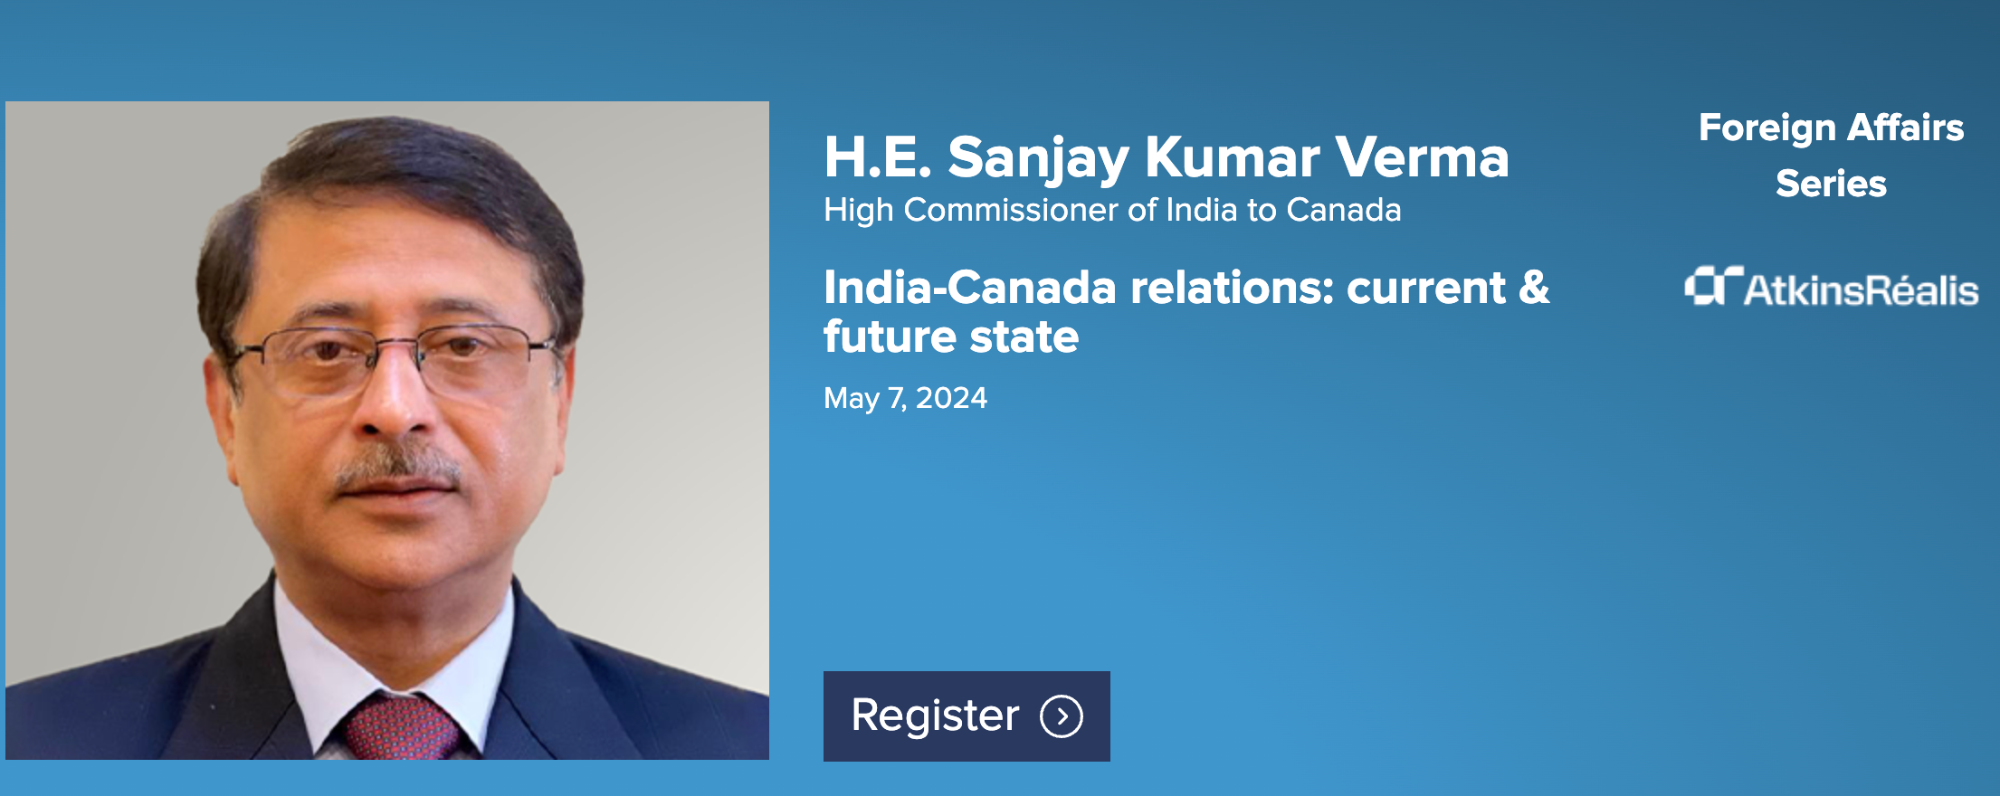 India-Canada relations: current & future state